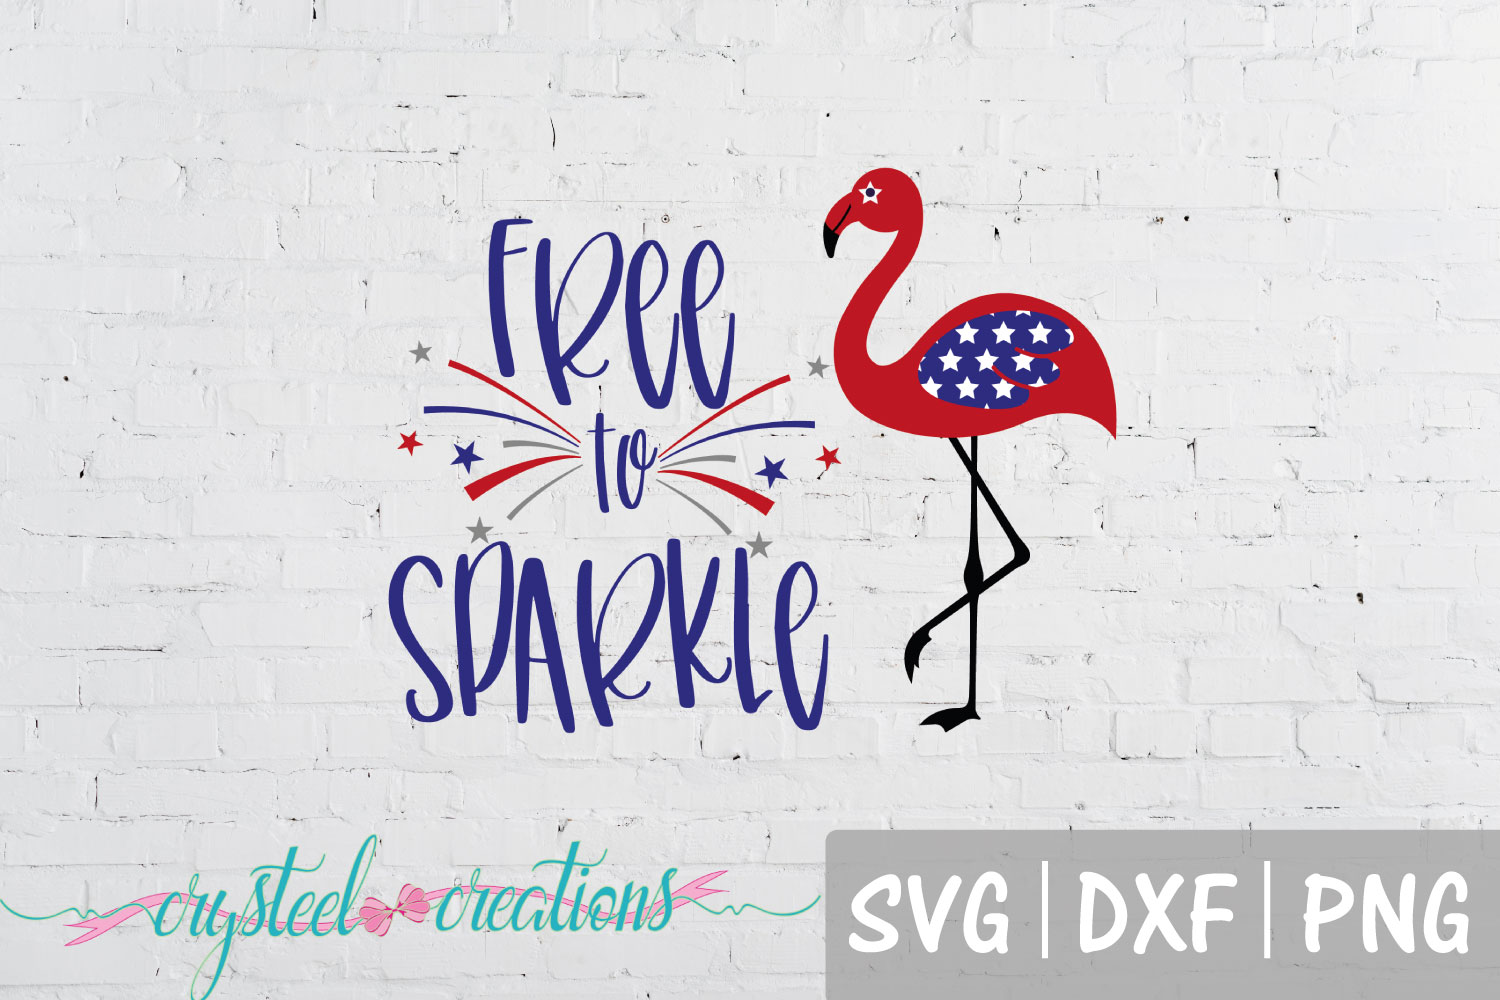 Download Free to sparkle -Flamingo SVG, DXF, PNG (104700) | Cut Files | Design Bundles